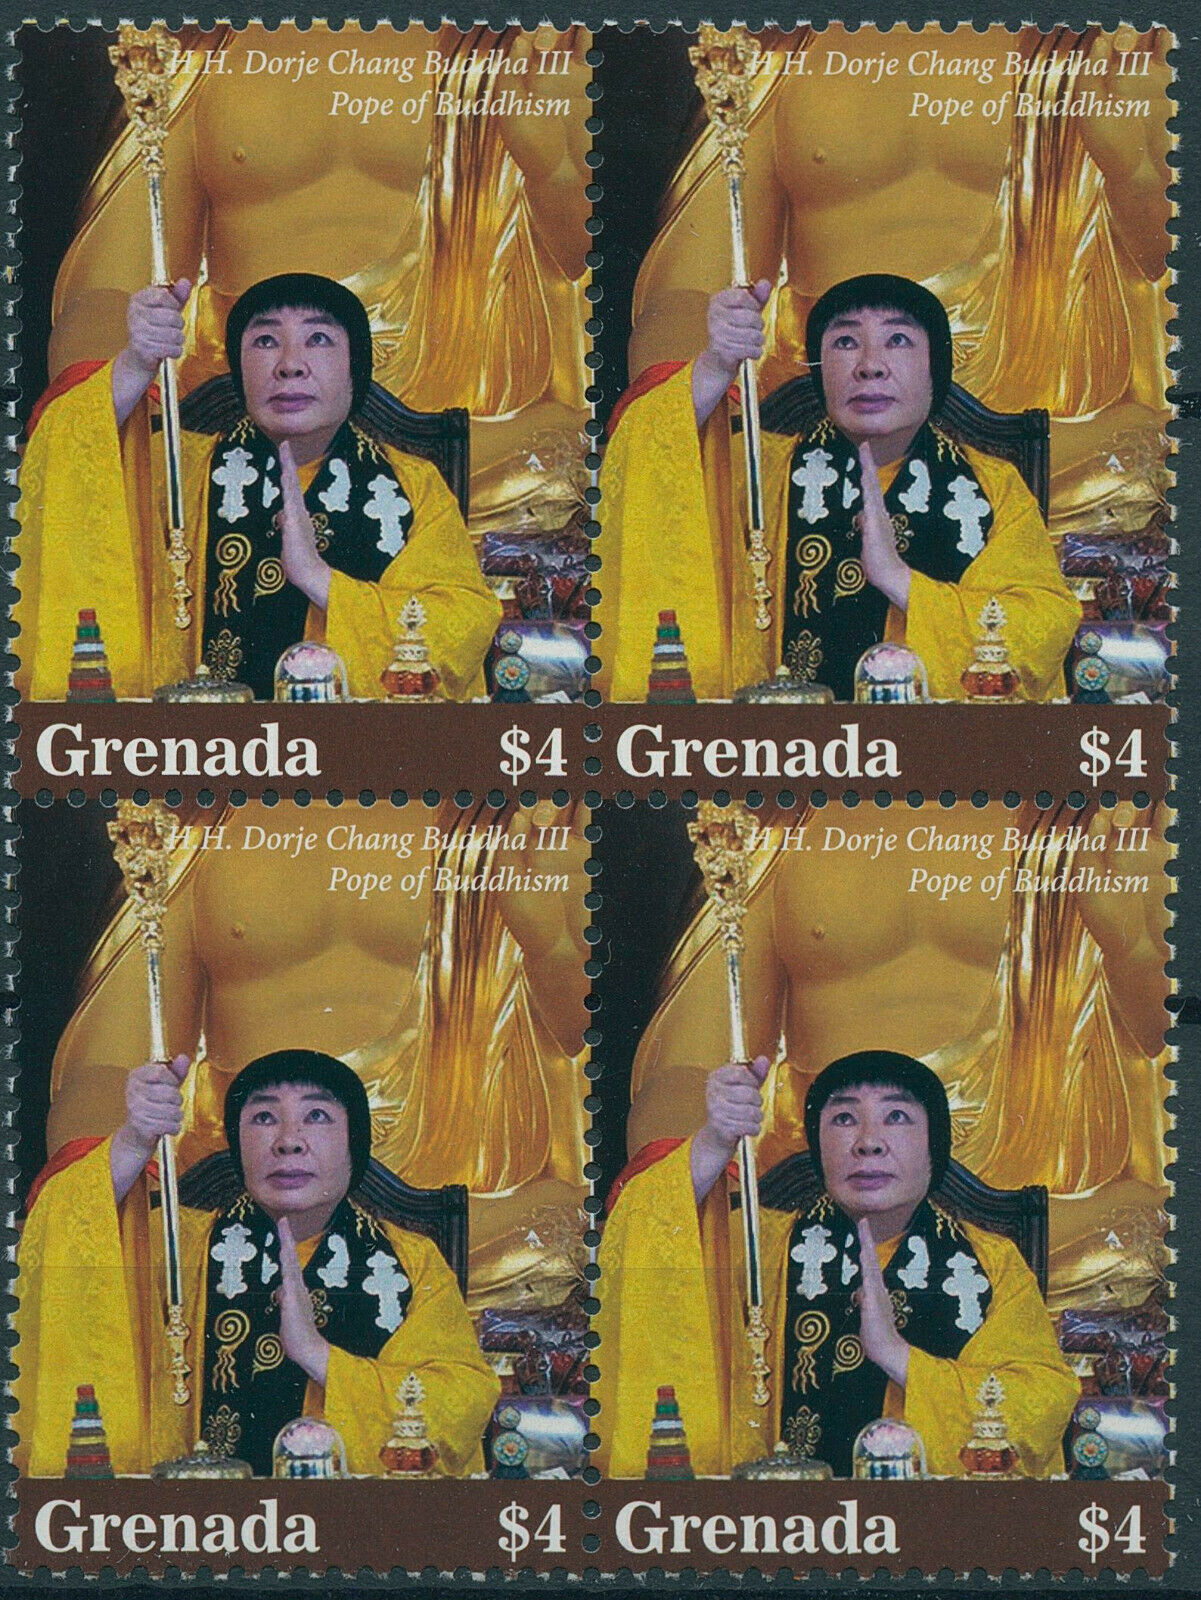 Grenada 2021 MNH Dorje Chang Buddha III Stamps Pope Buddhism Religion 4v Block